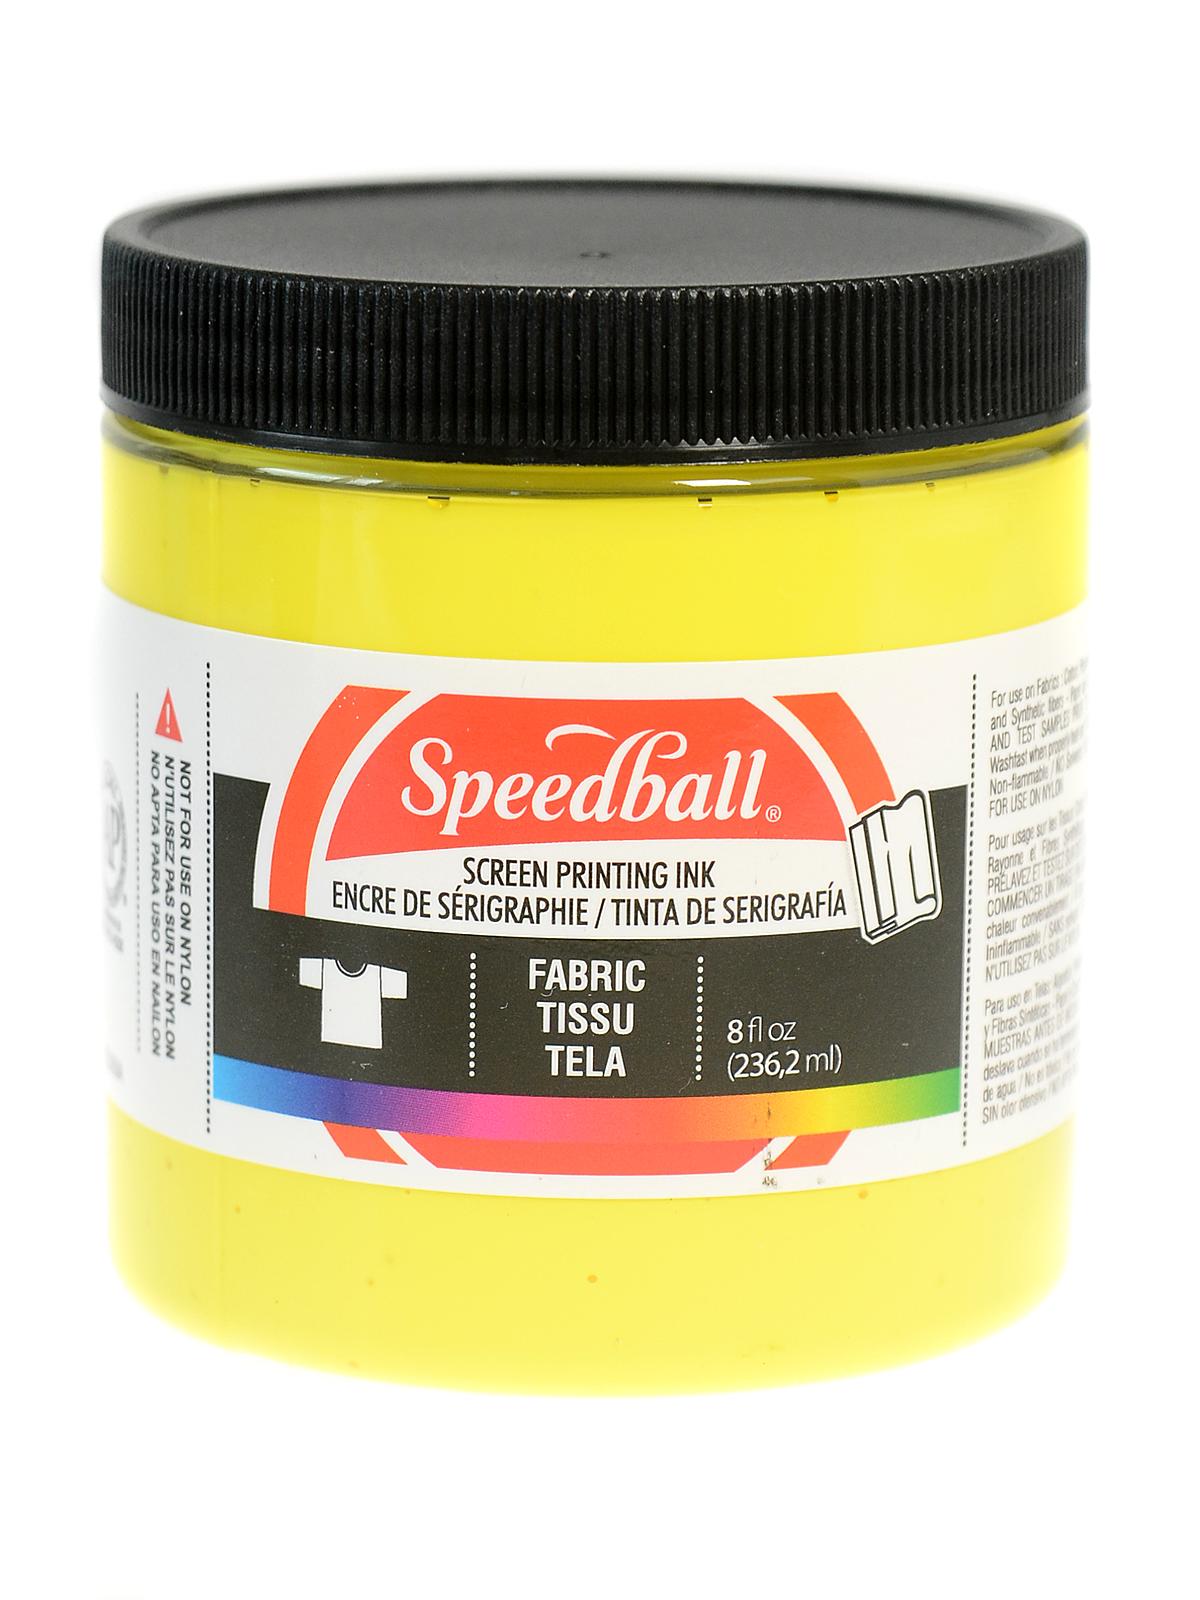 Speedball Water-Soluble Block Printing Ink, Fluorescent Yellow